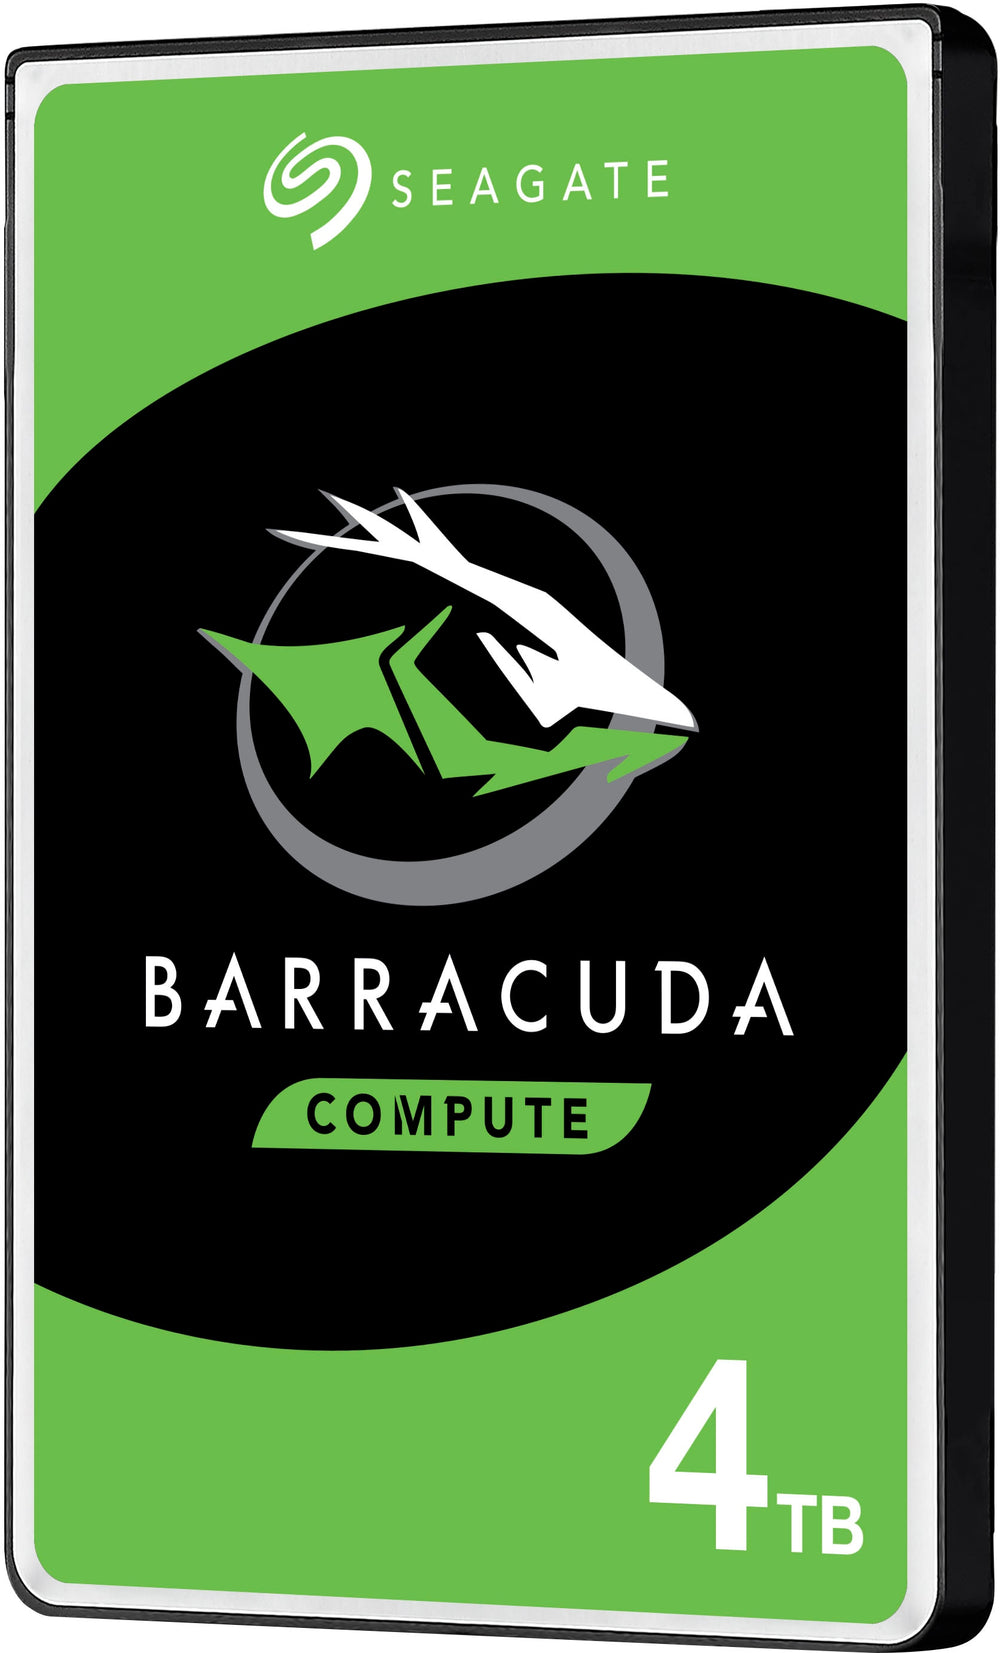 Seagate - Barracuda 4TB Internal SATA Hard Drive for Desktops_1